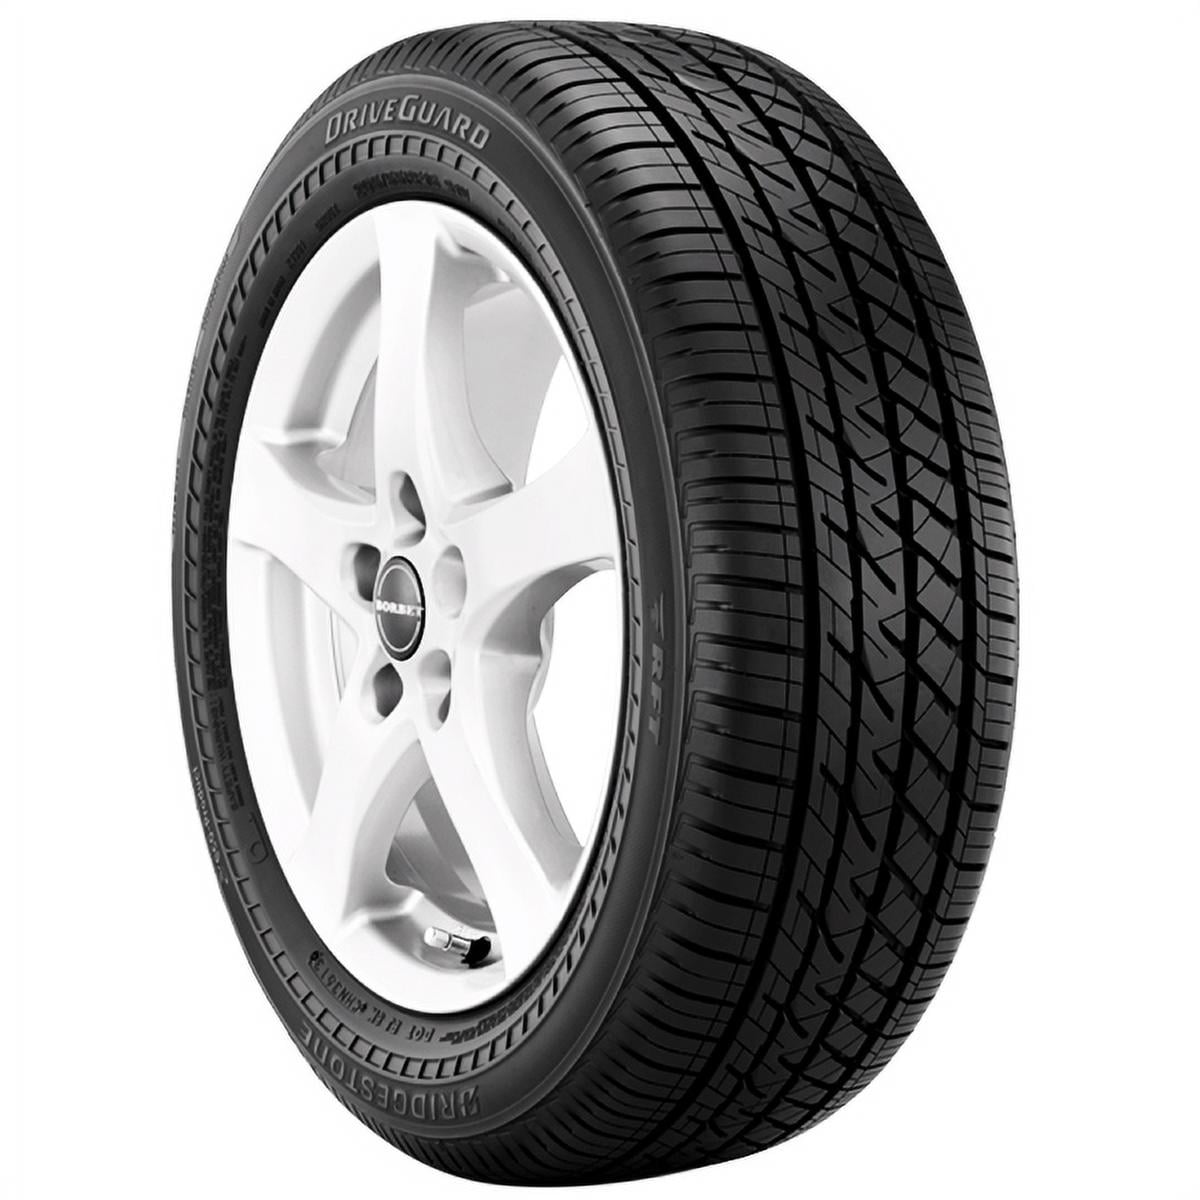 Bridgestone DriveGuard 225/60R18 100H A/S Performance Tire 